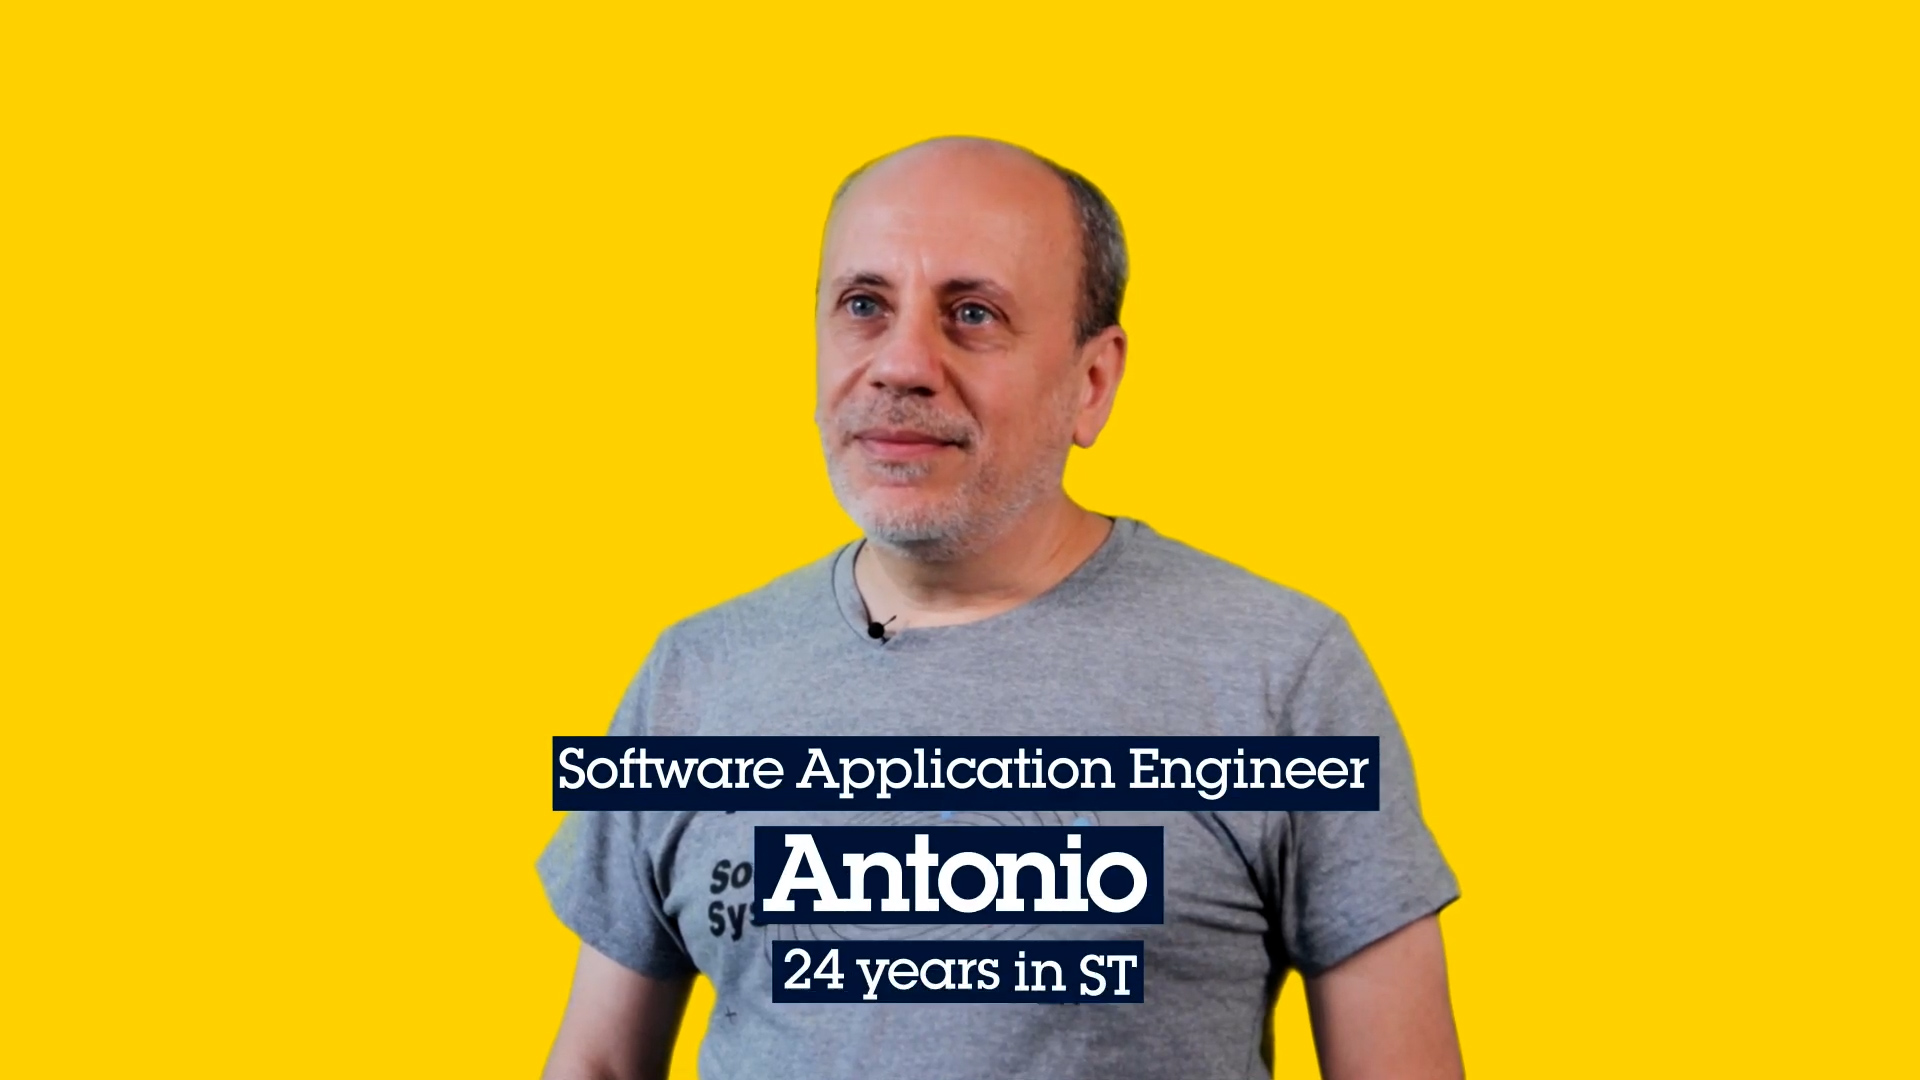 【ST Career】STMicroelectronics Antonio - Software application engineer